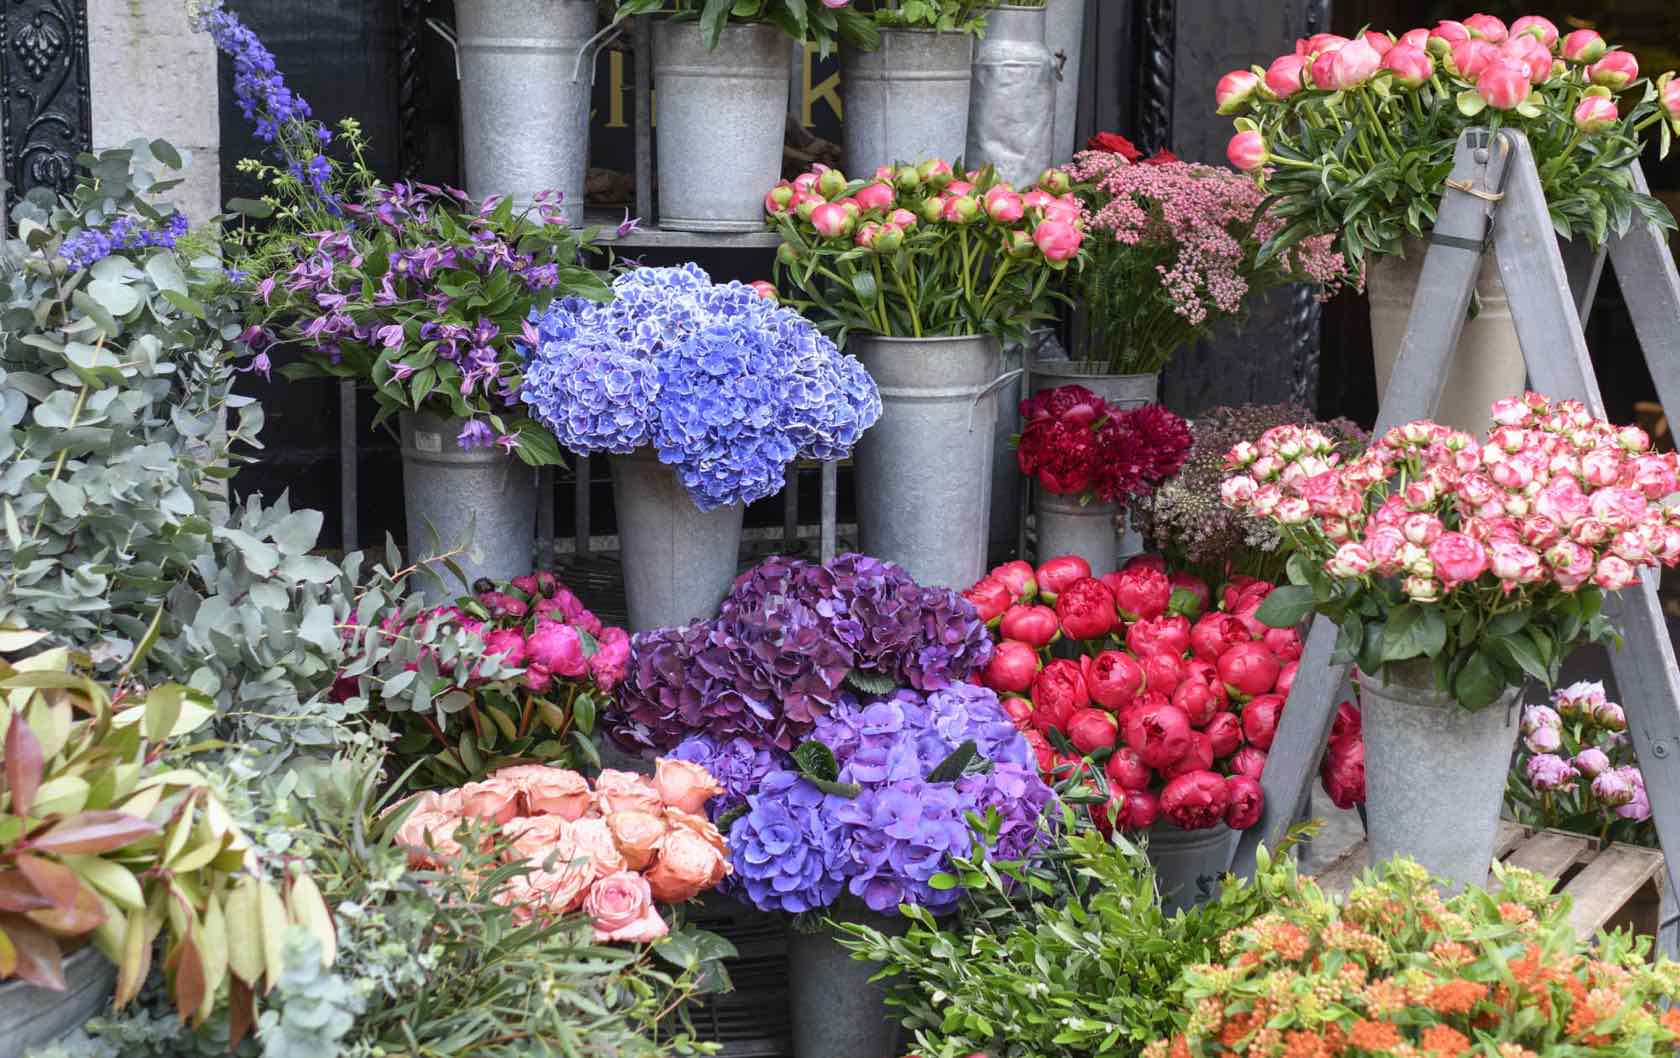 London flower shop